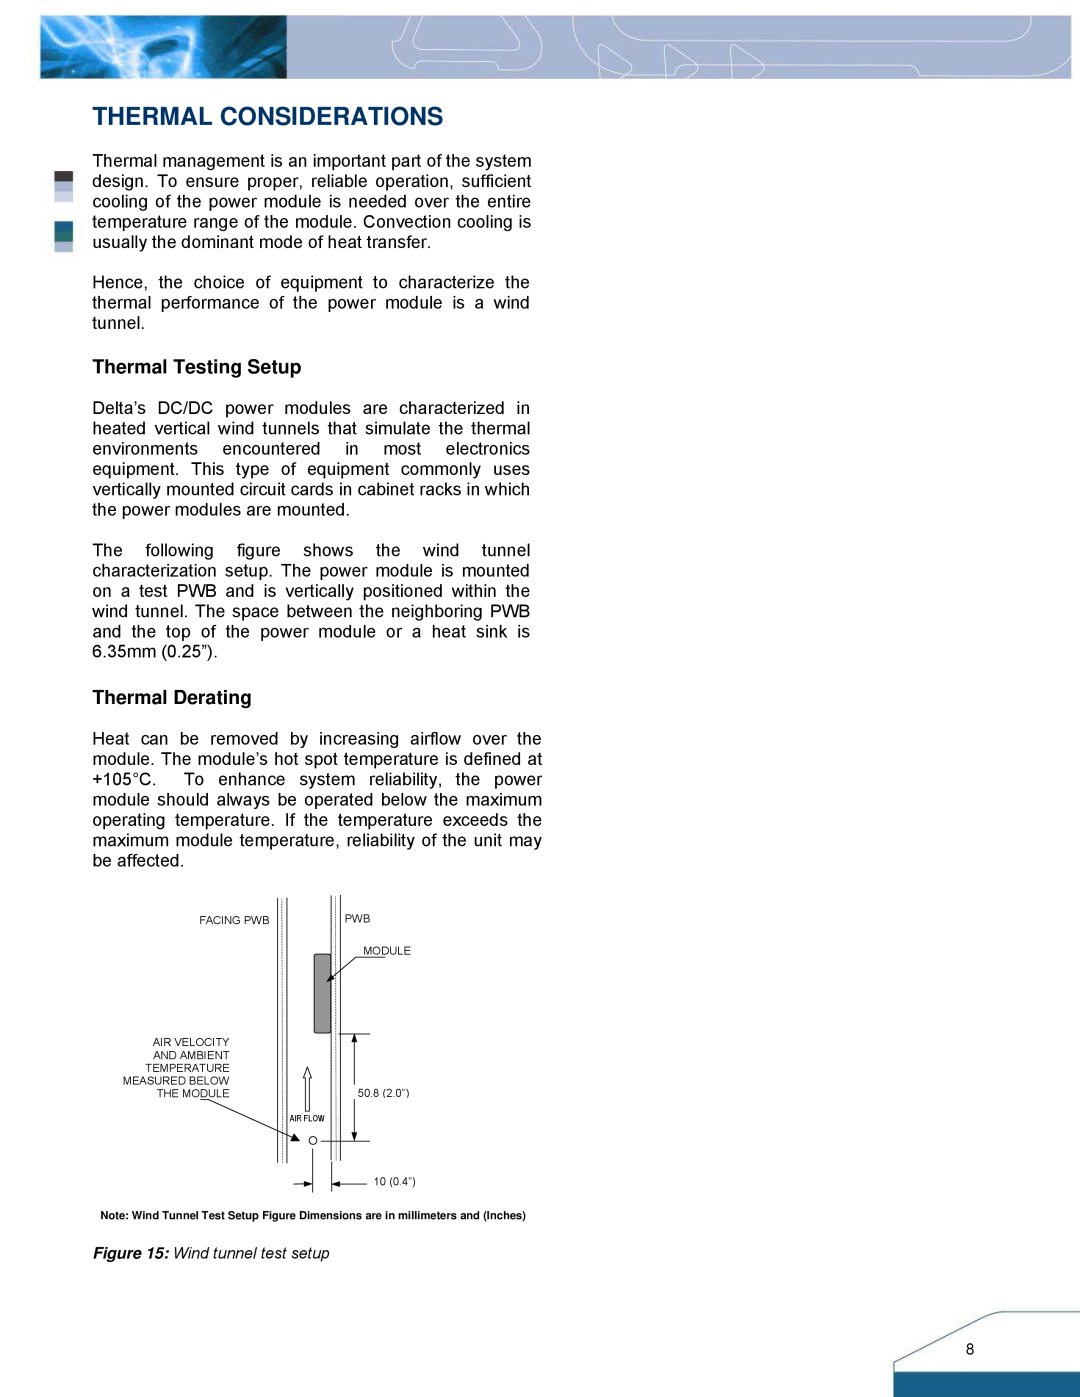 Delta Electronics S36SS manual Thermal Considerations, Thermal Testing Setup, Thermal Derating 